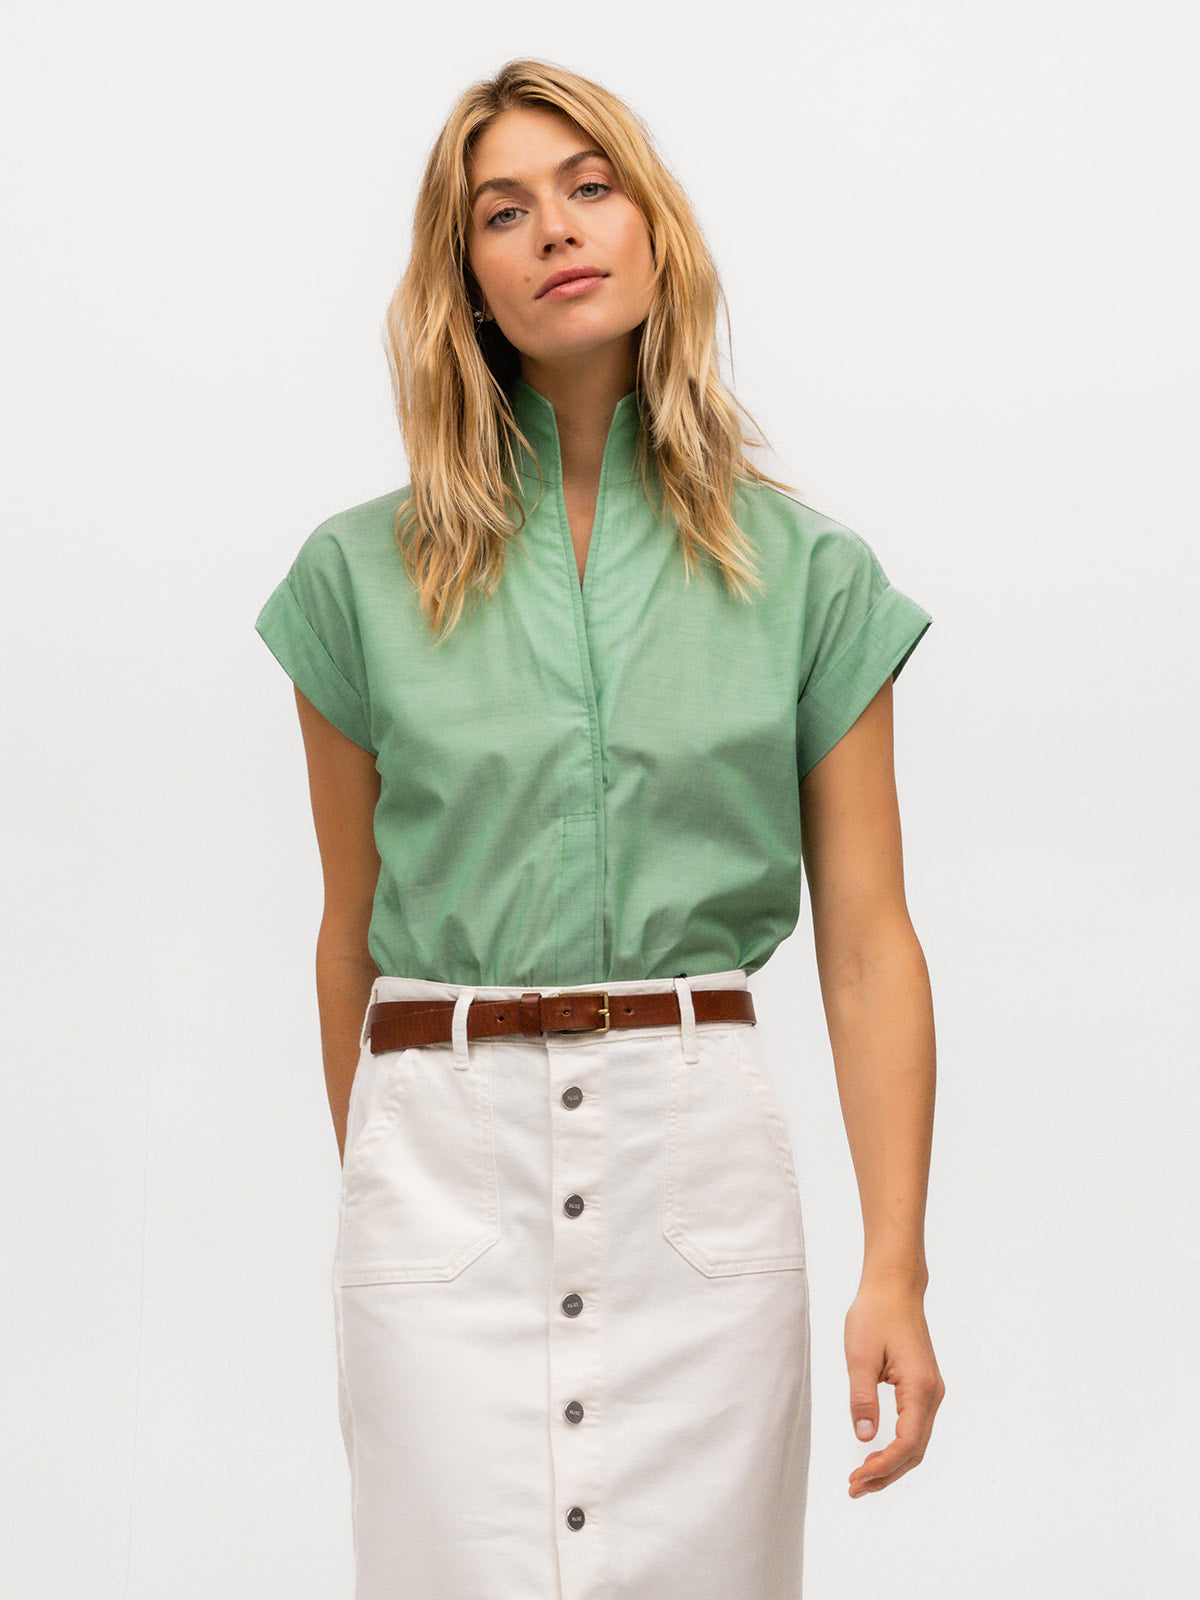 Women's Button Up Shirts | The World's Finest Shirts for Women– Sarah ...